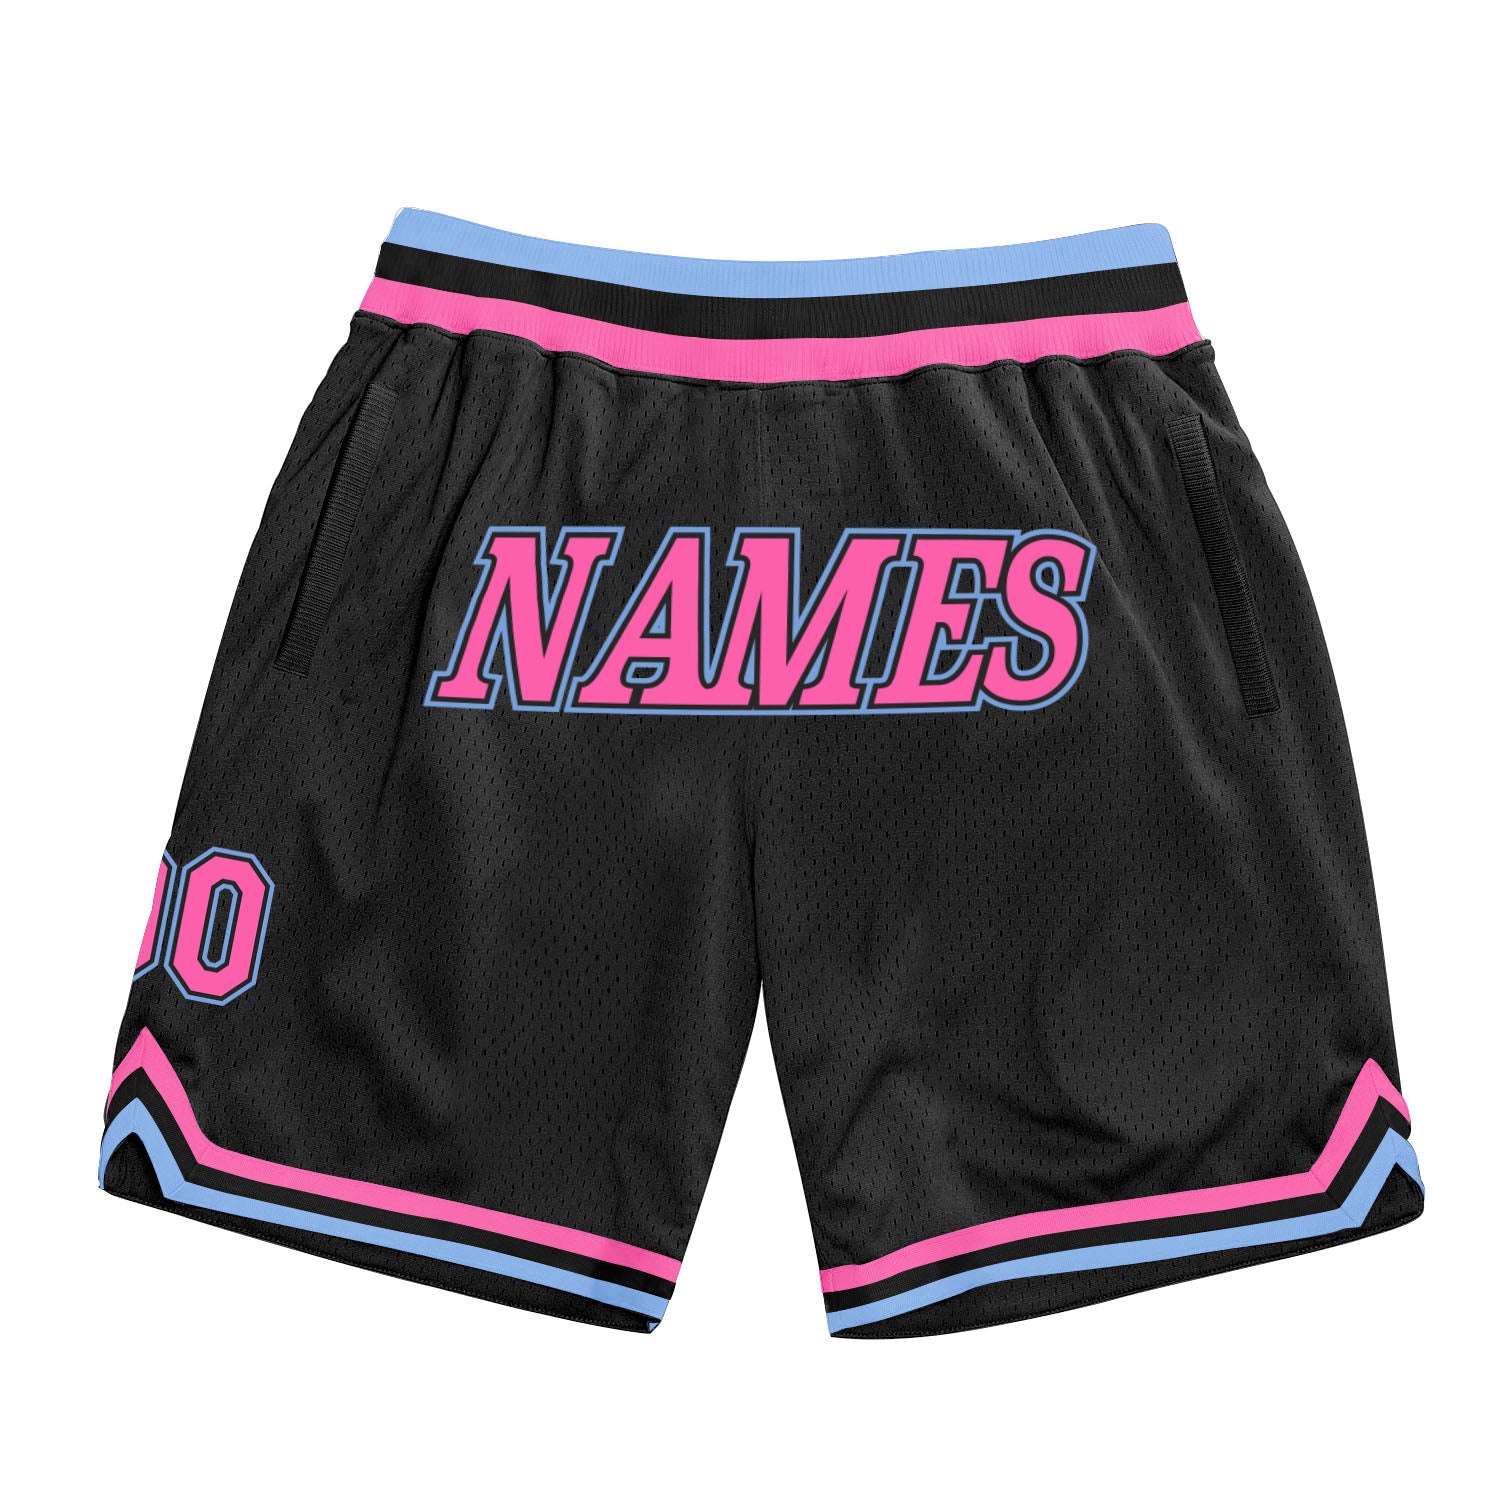 Sale Build Pink Basketball Authentic Light Blue Throwback Jersey Black –  CustomJerseysPro